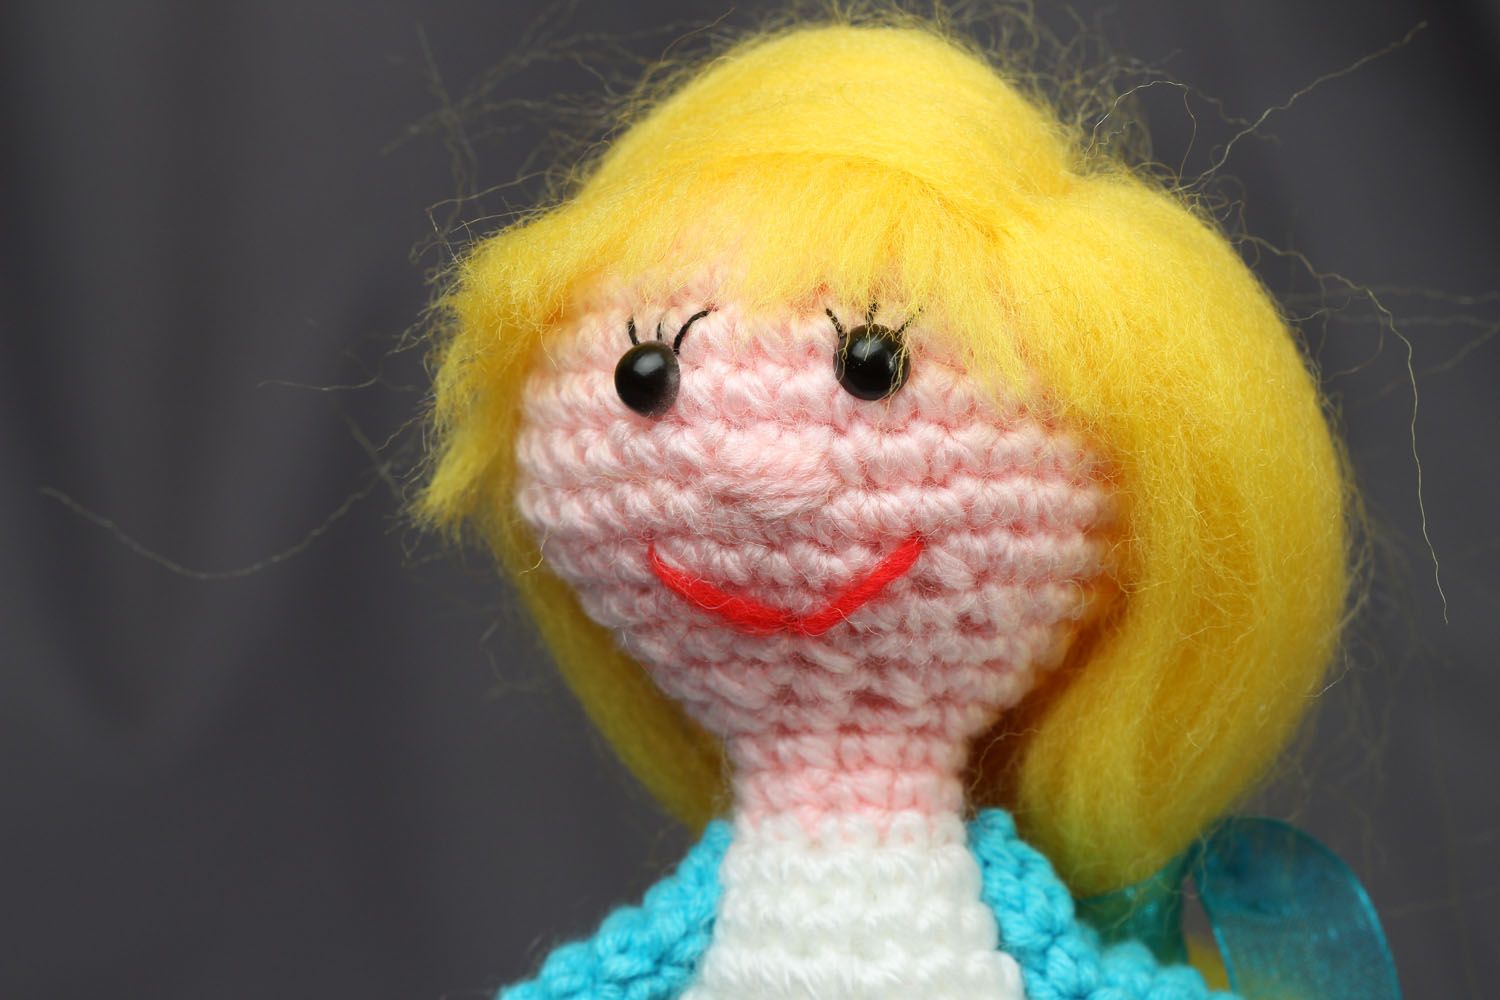 Designer crochet toy photo 2